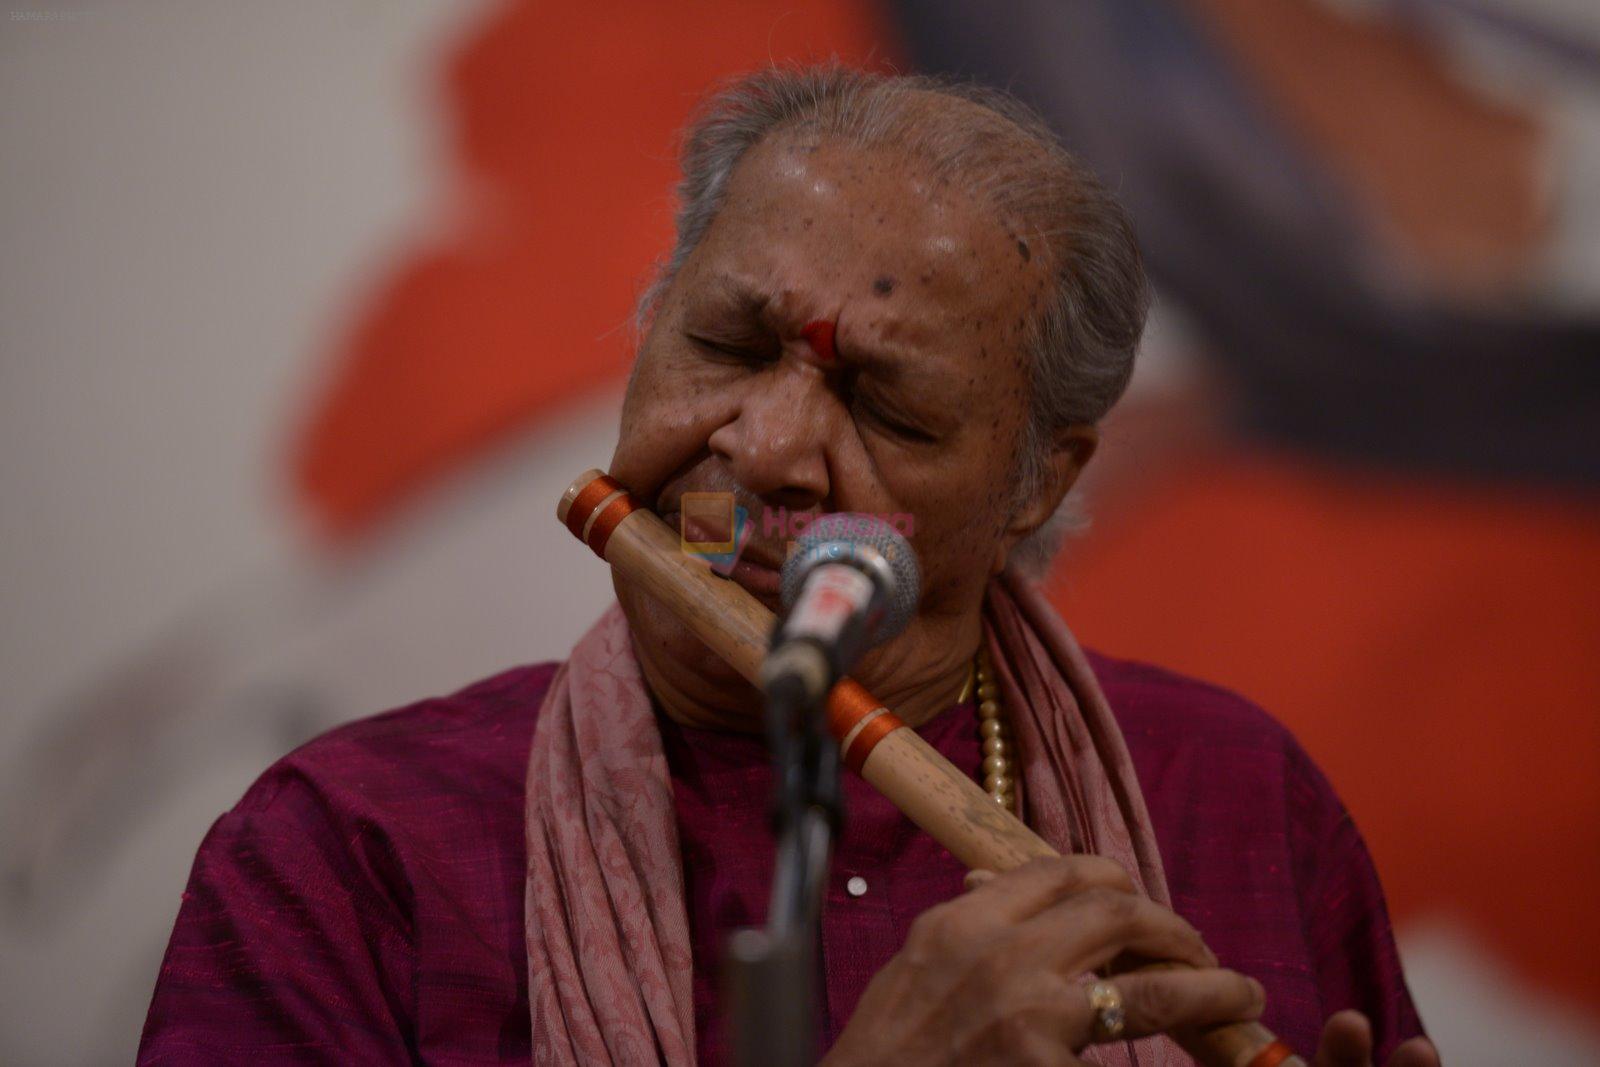 Pandit Hariprasad Chaurasia concert hosted by Christies in Taj Hotel, Mumbai on 9th Dec 2014